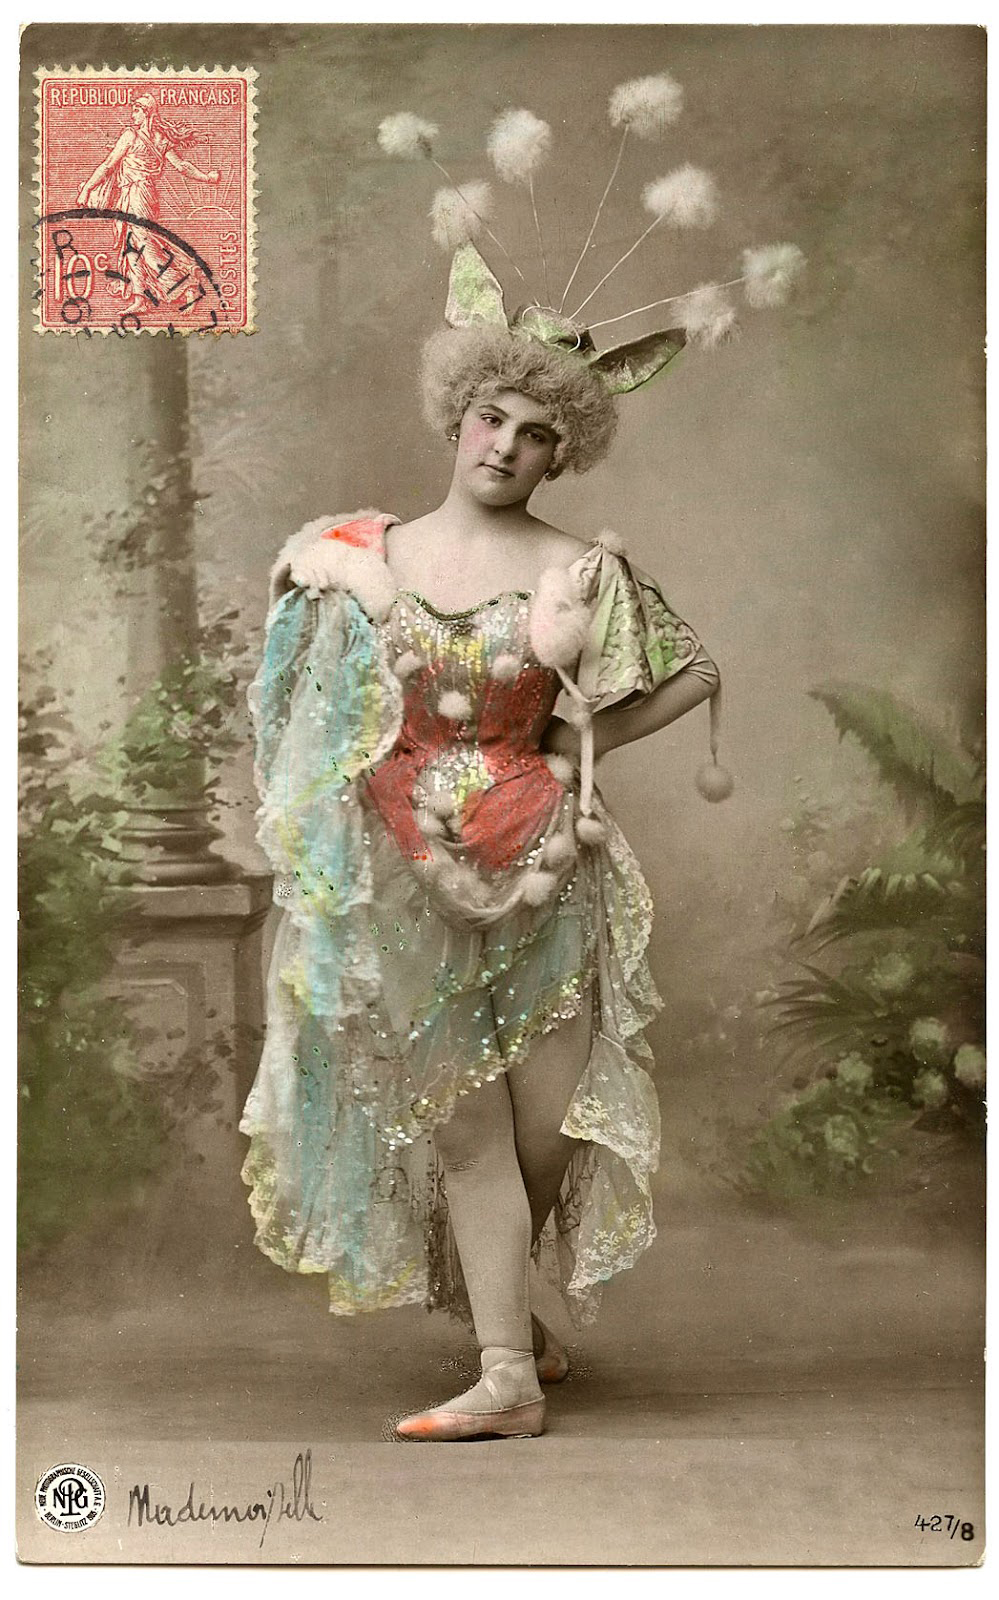 6 Vintage Burlesque Dancer Photos - The Graphics Fairy